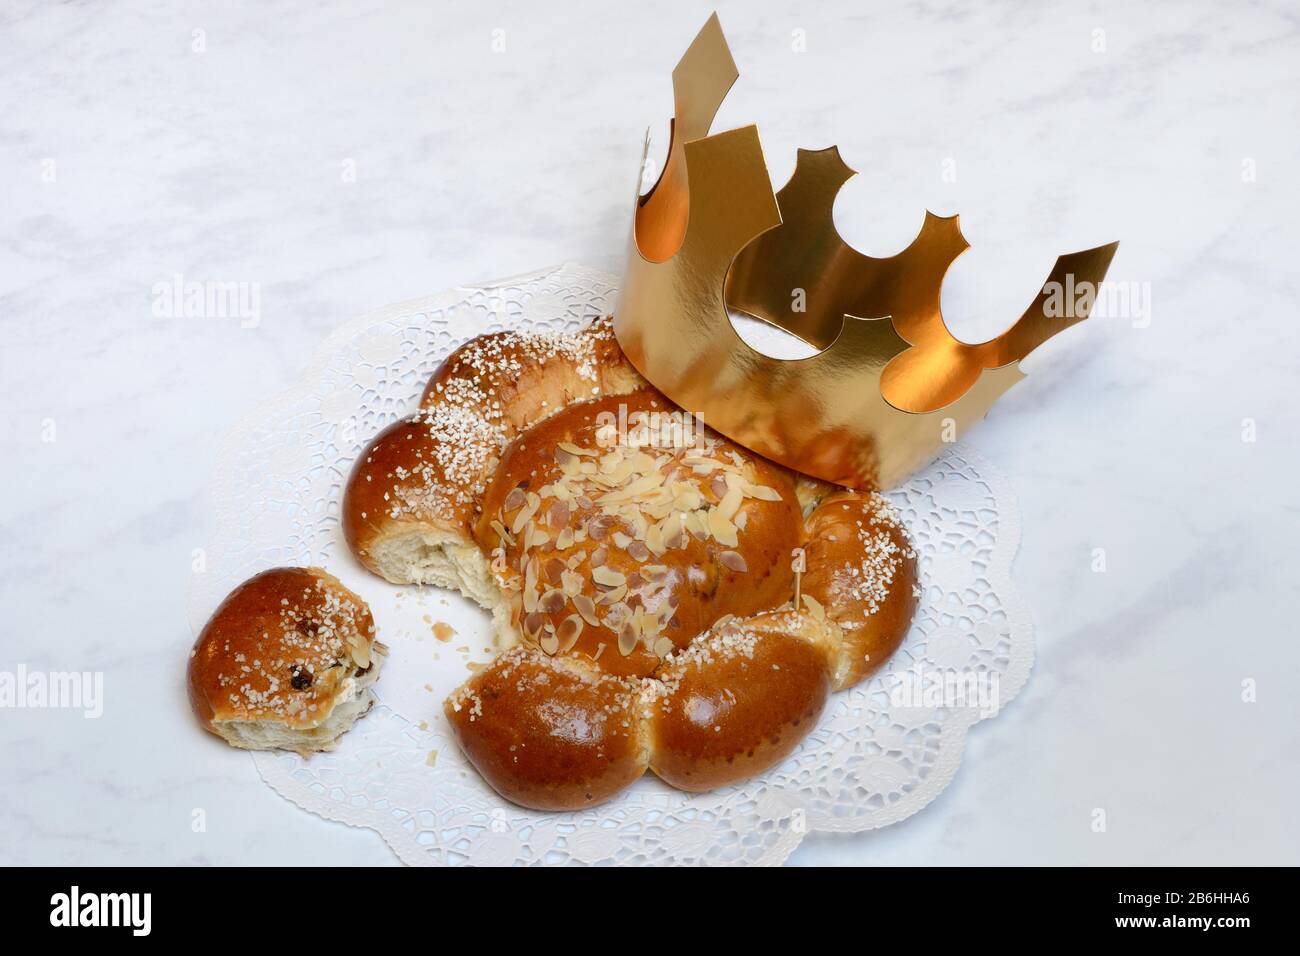 Epiphany cake with crown, Switzerland Stock Photo